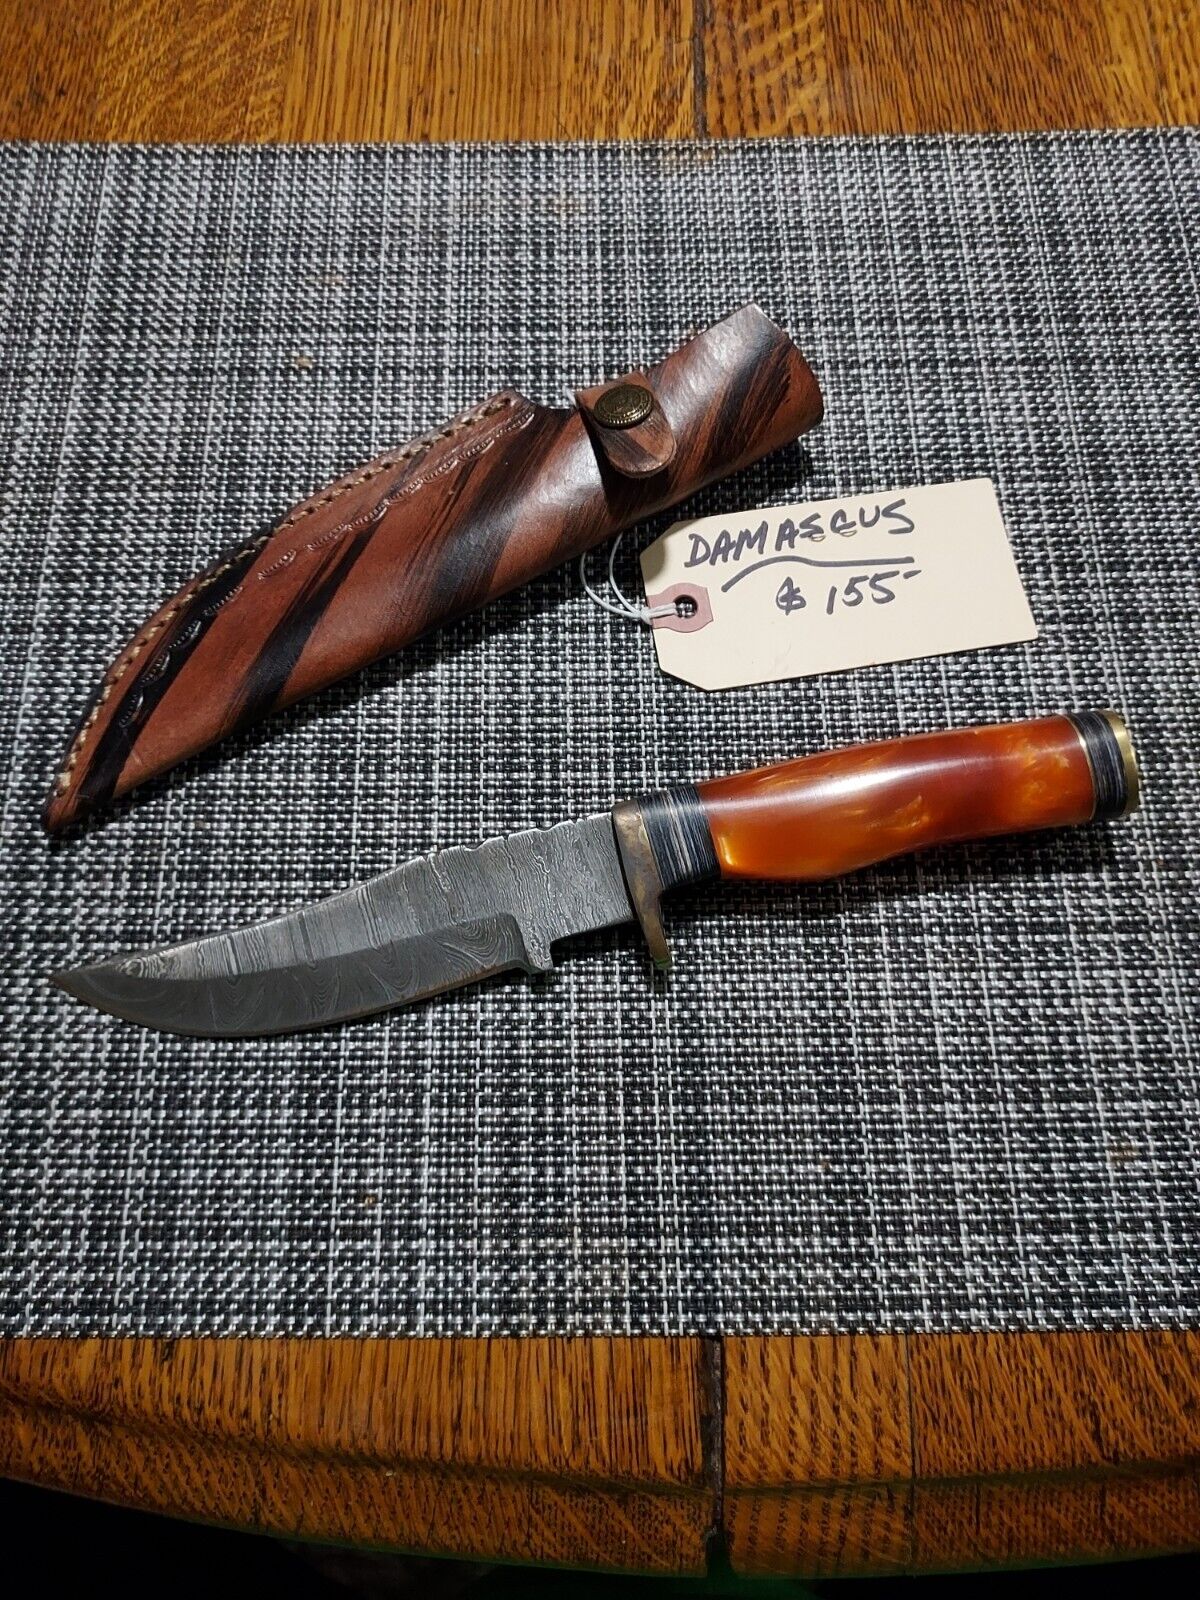 Custom Damascus Steel USA Made Knife With Sheath